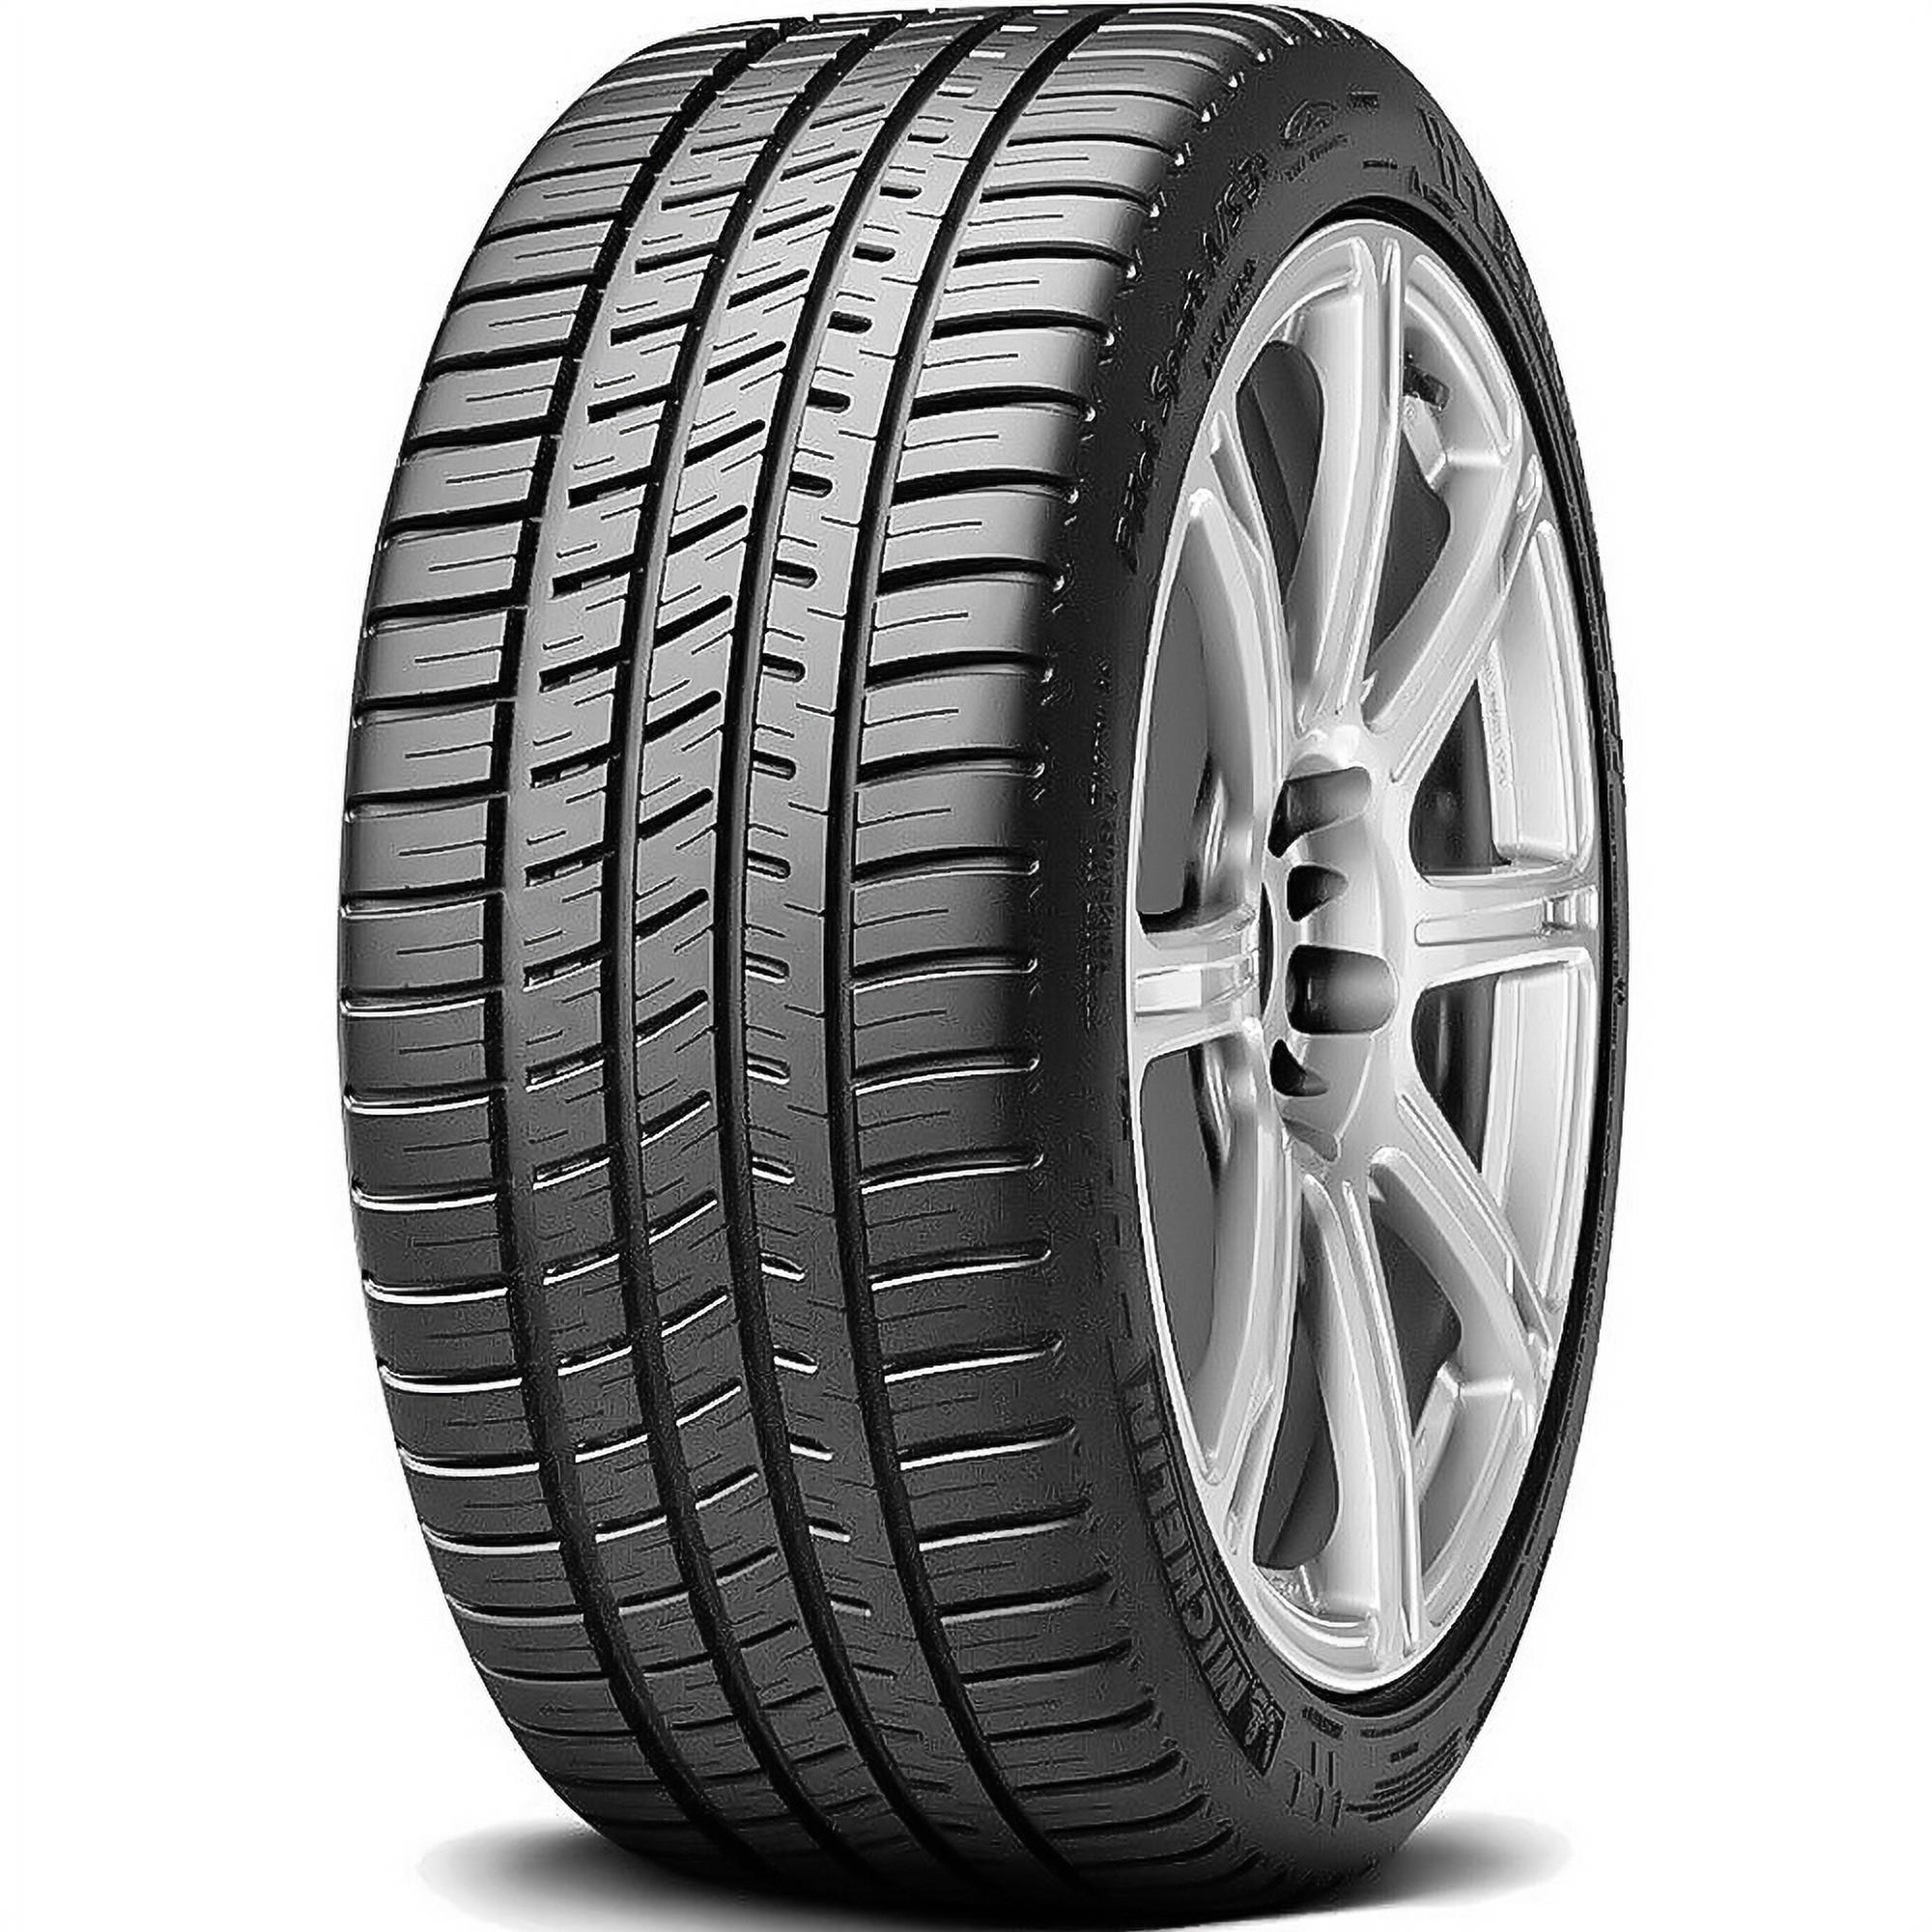 Michelin Pilot Sport A/S 3+ All-Season 245/40ZR20/XL 99Y Tire Fits: 2014-16 Chevrolet Impala LTZ, 2017-18 Chevrolet Impala LT - image 2 of 3